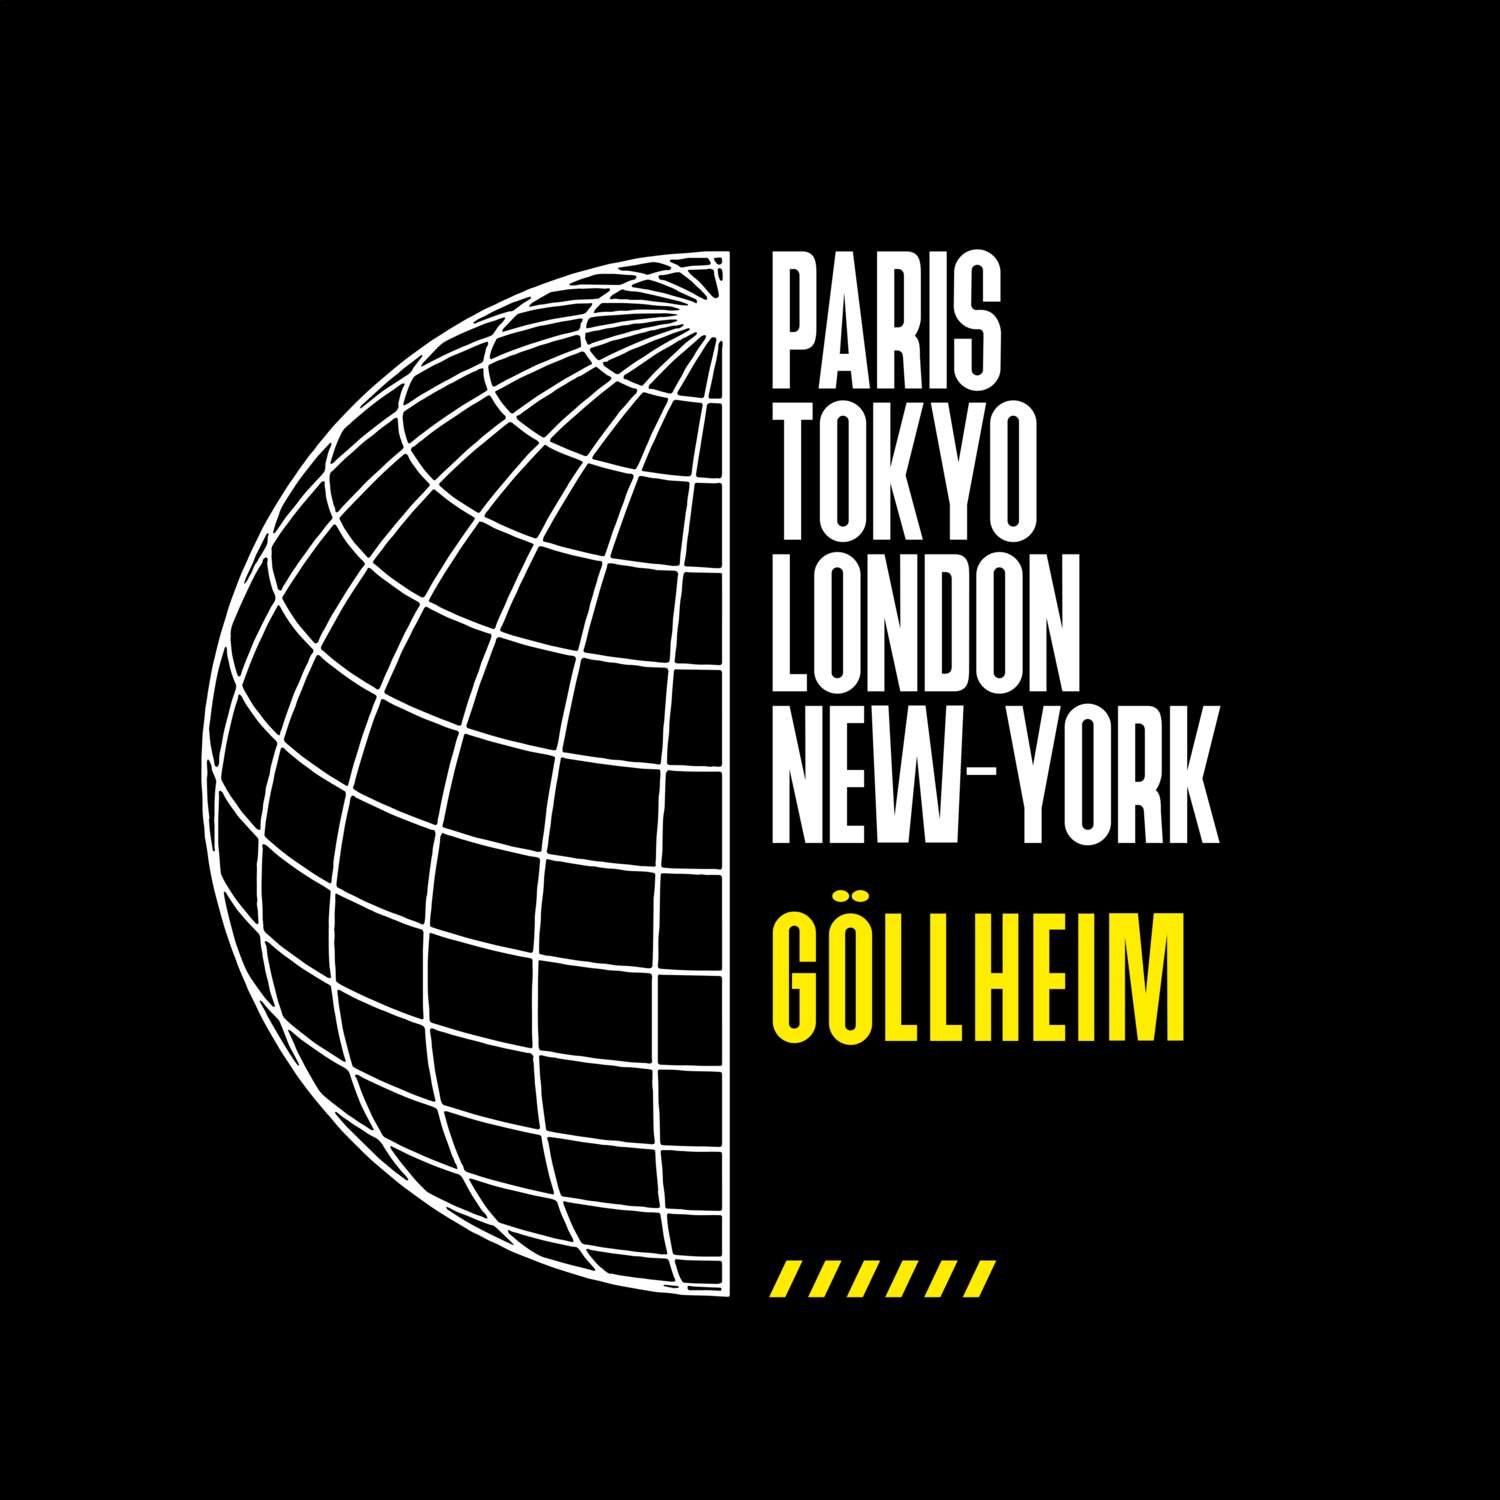 Göllheim T-Shirt »Paris Tokyo London«